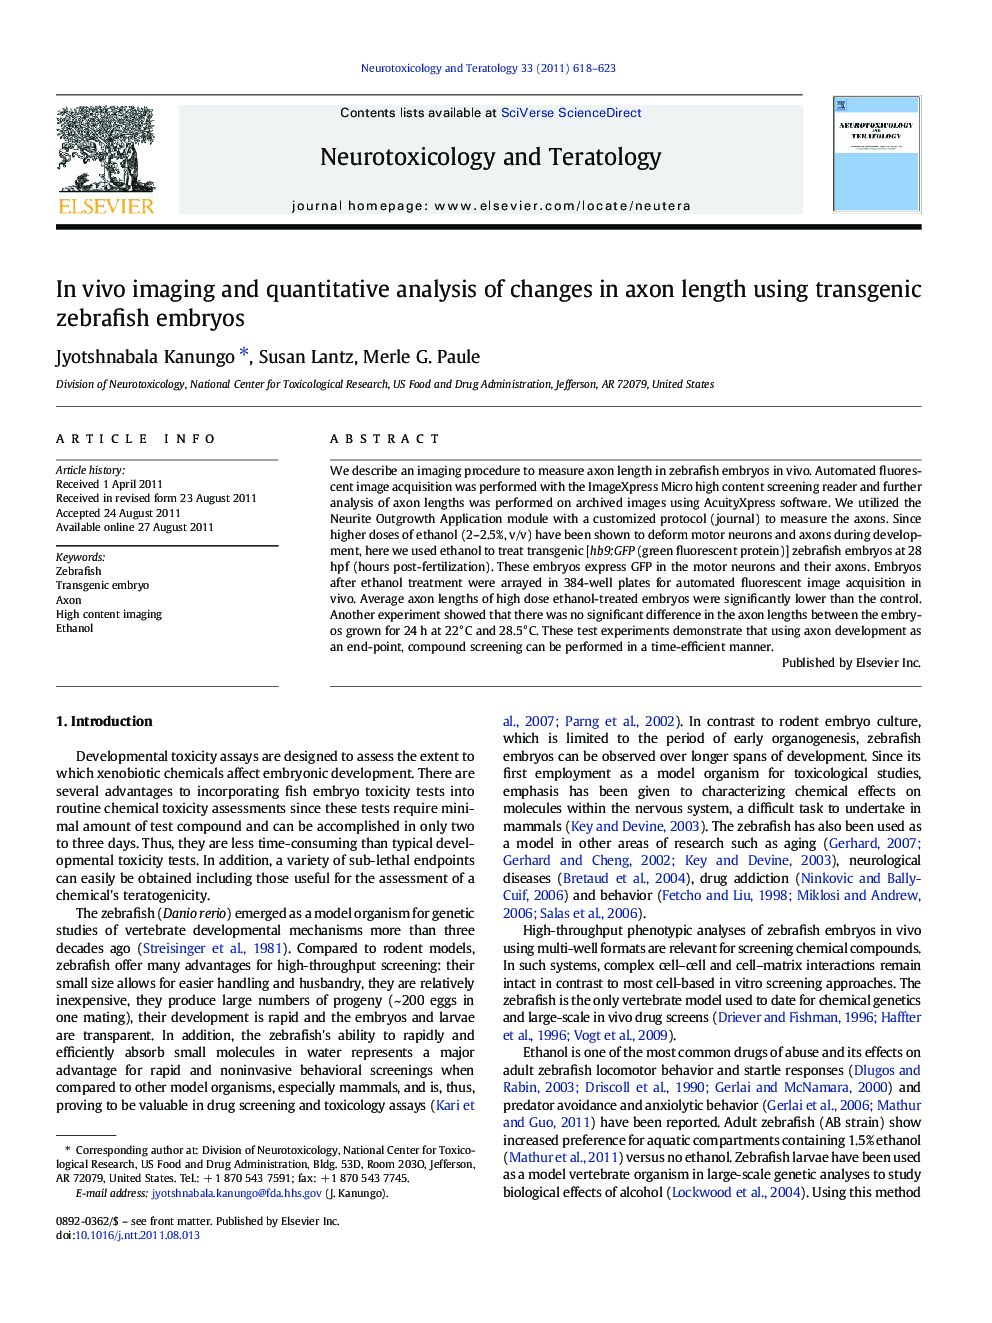 In vivo imaging and quantitative analysis of changes in axon length using transgenic zebrafish embryos